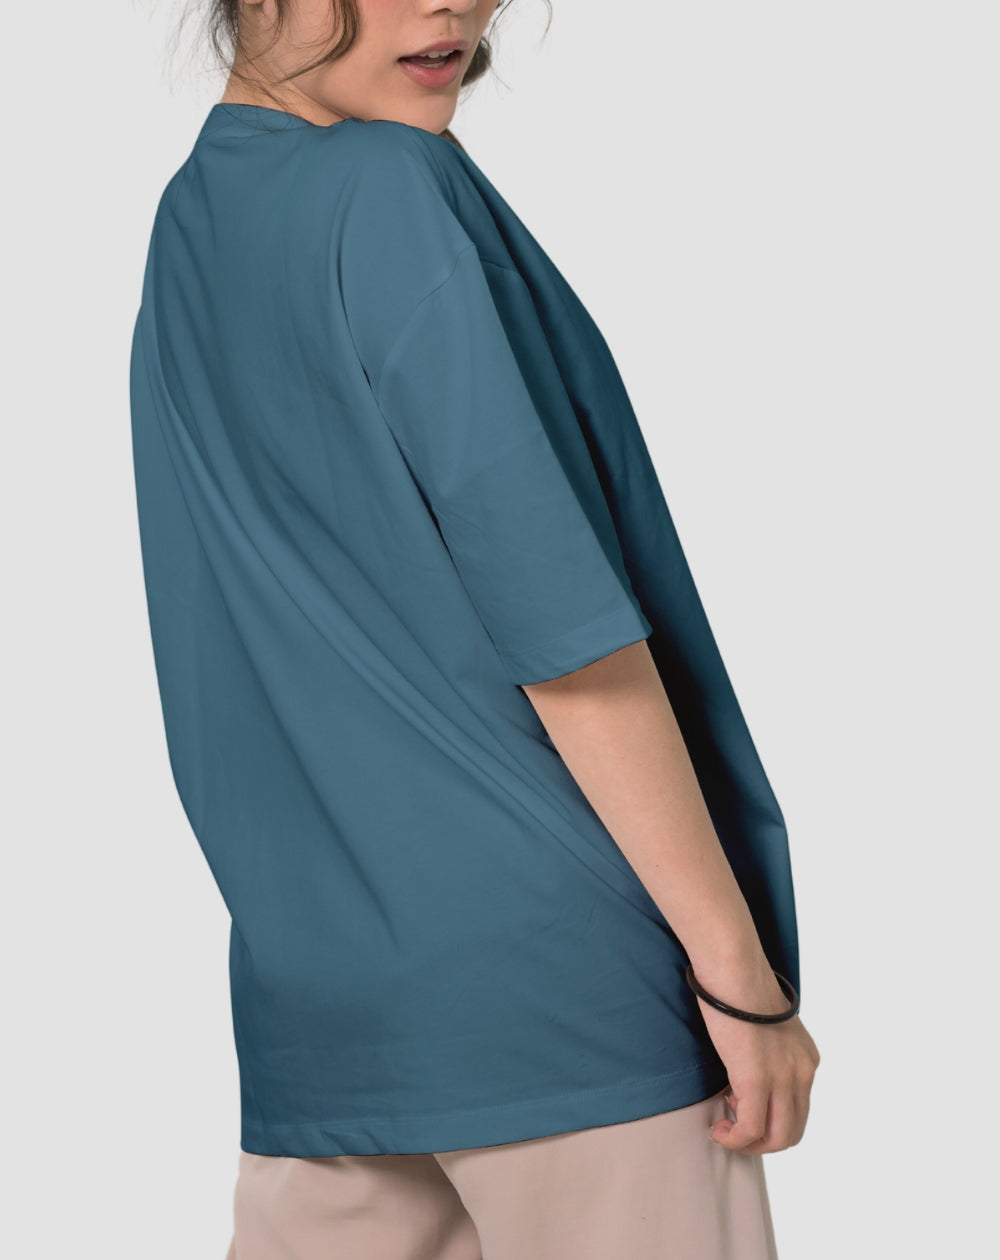 Oversized Short Sleeve Tee | Unisex Teal Blue